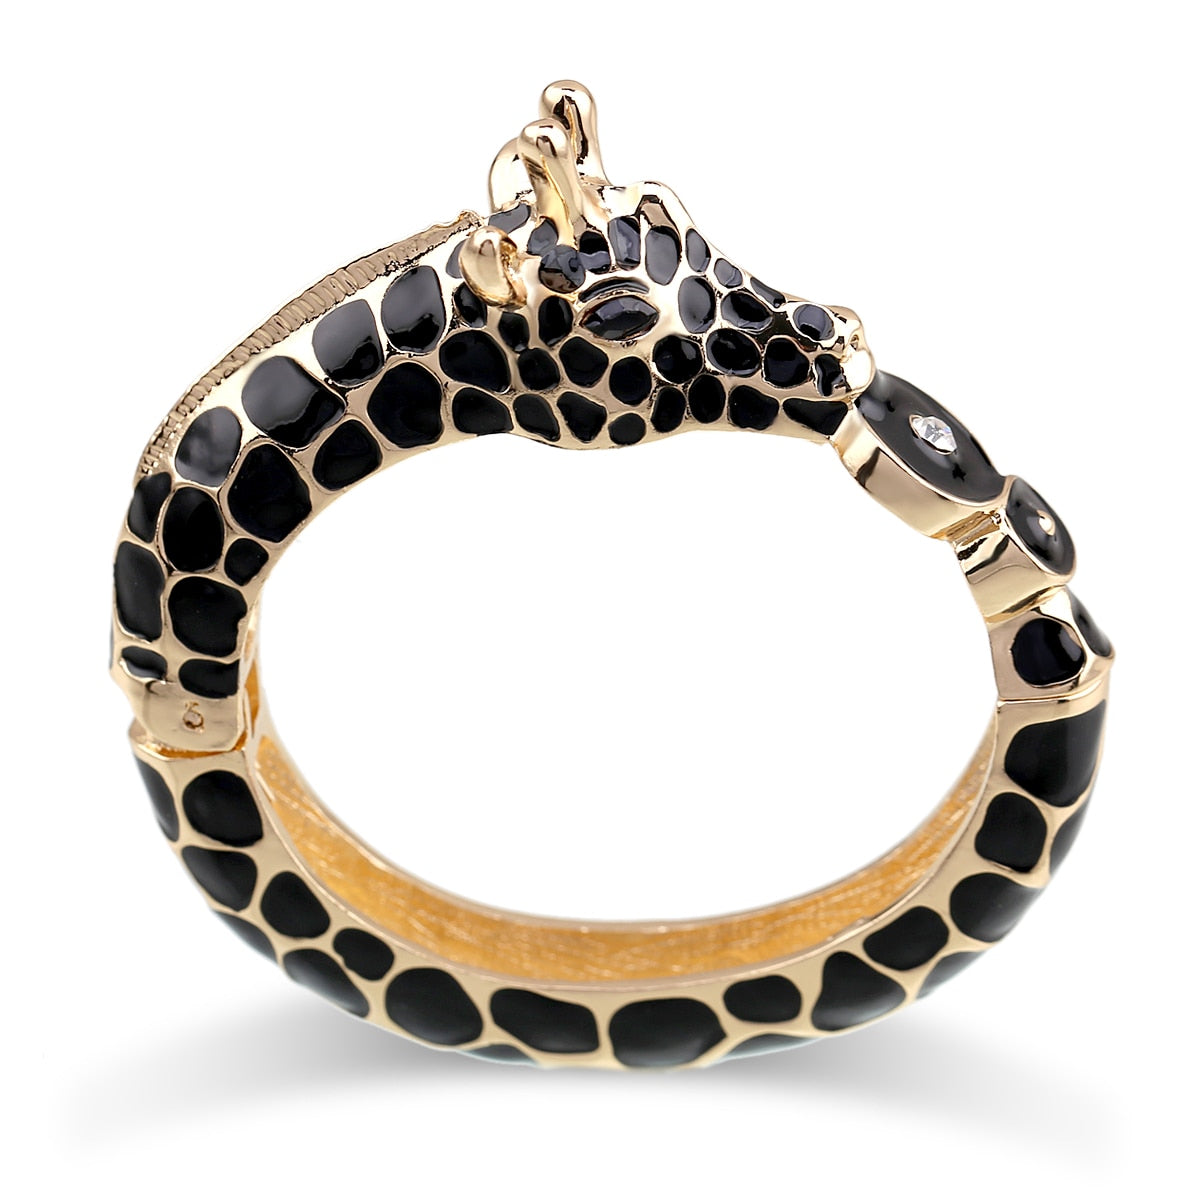 Realistic Giraffe Cuff Bracelet - Style's Bug Black